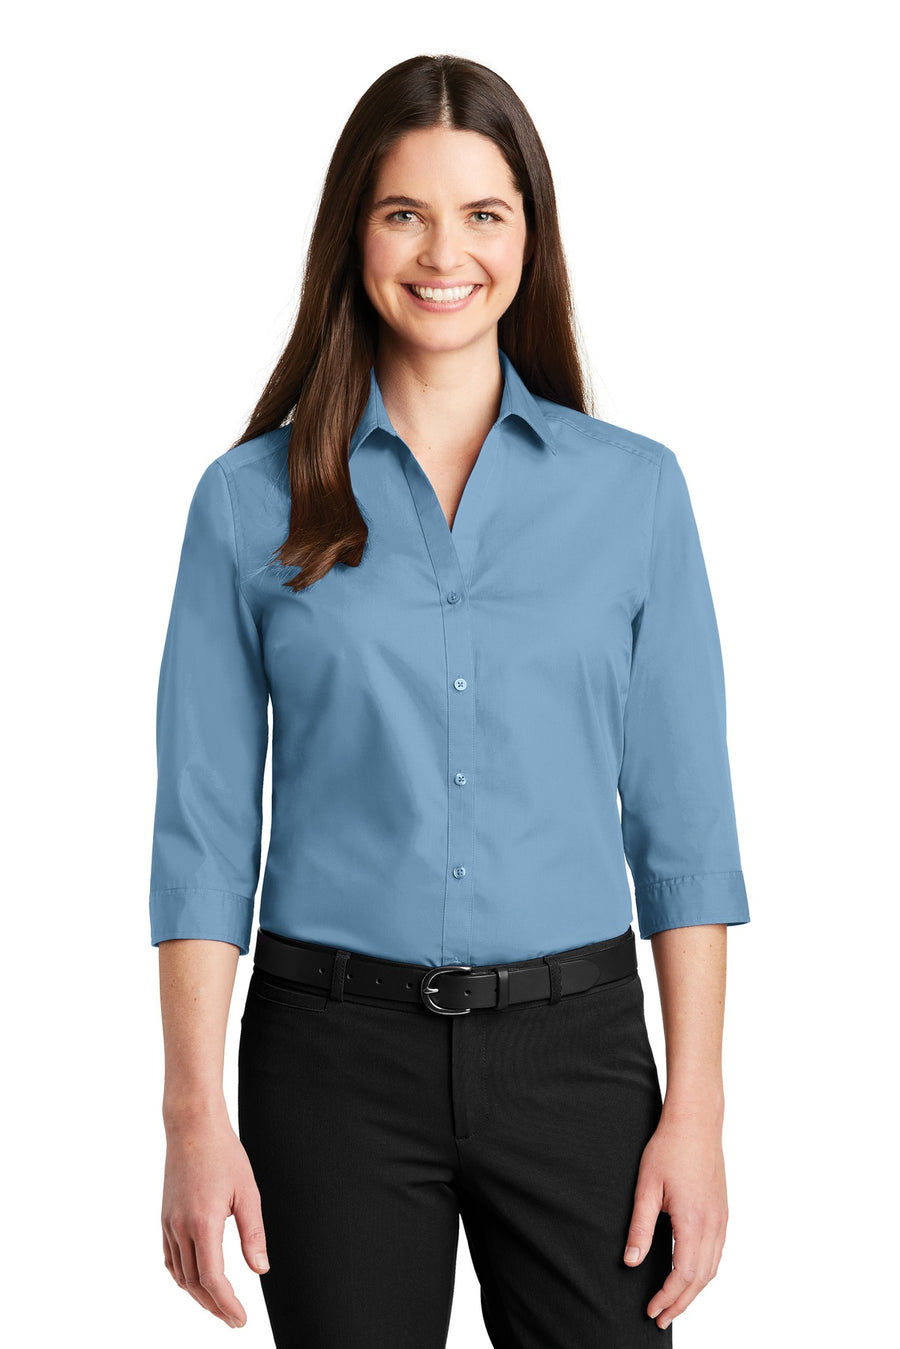 Port Authority 3/4-Sleeve Carefree Poplin Shirt.